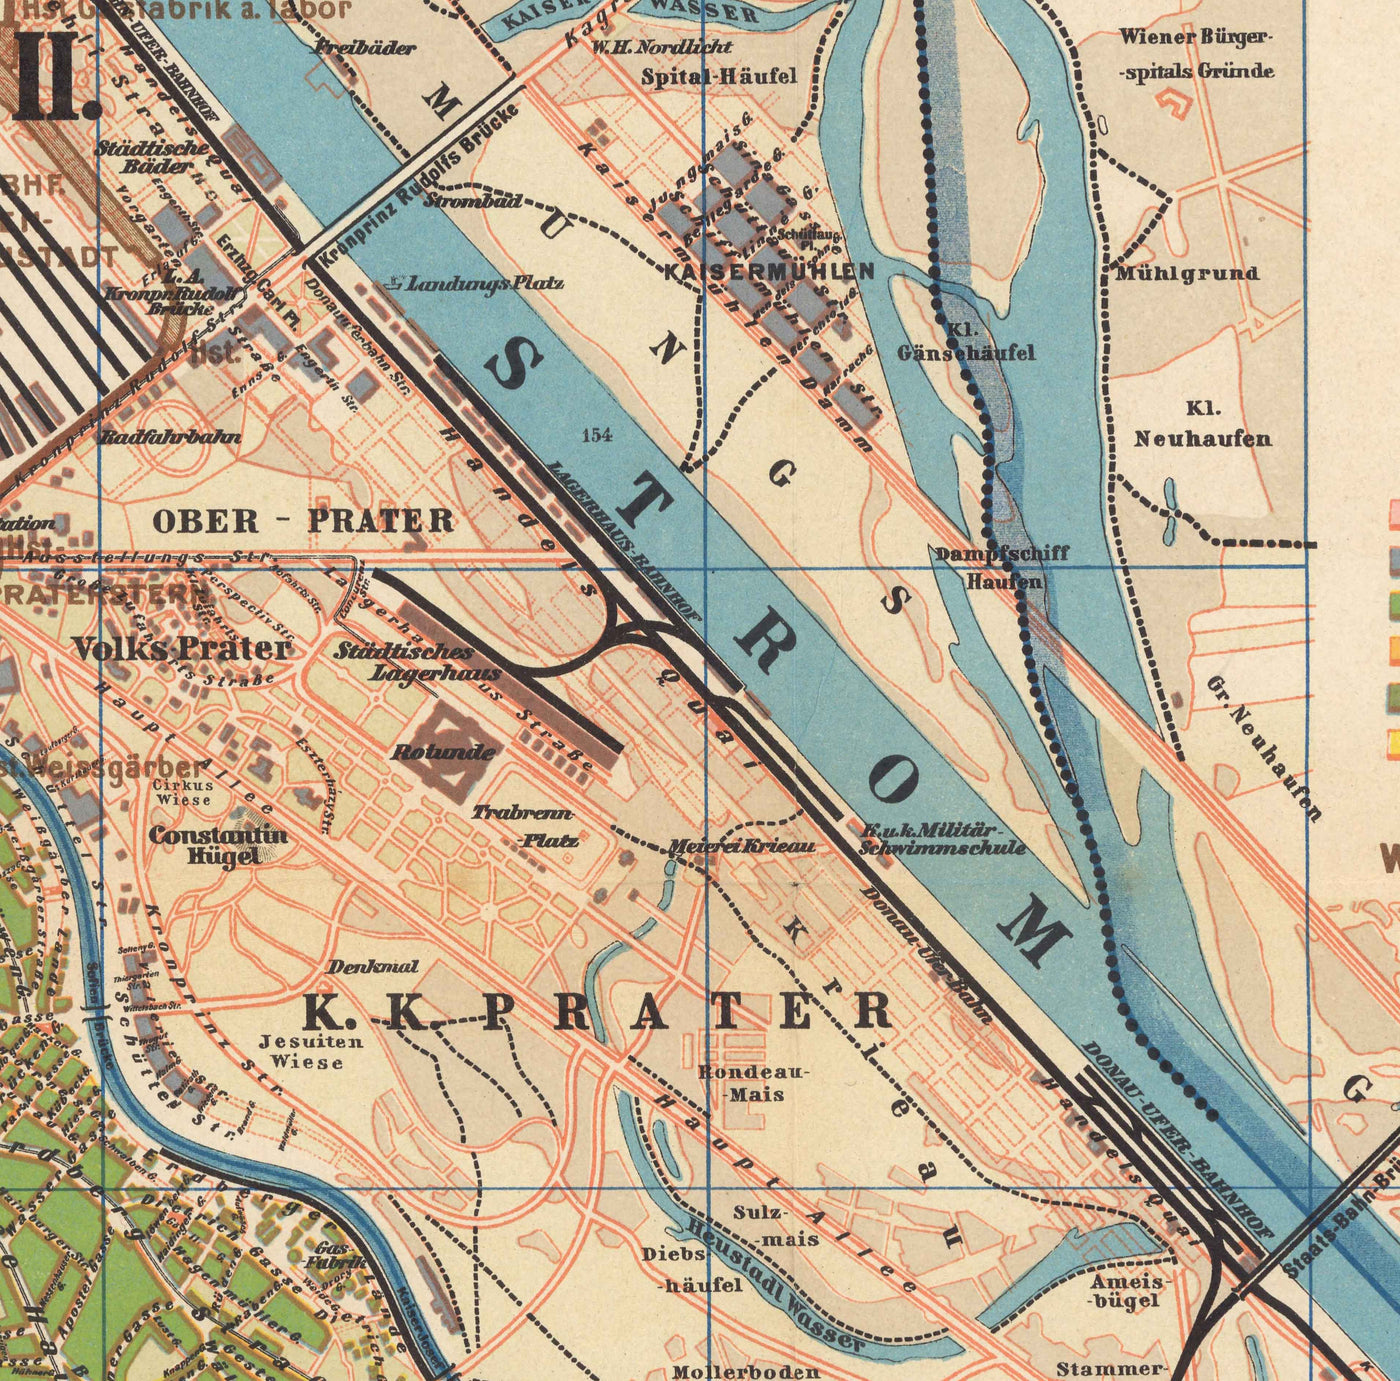 Mapa antiguo de Viena por Gustav Freytag en 1895 - Innere Stadt, Leopoldstadt, Wieden, Margareten, Landstraße